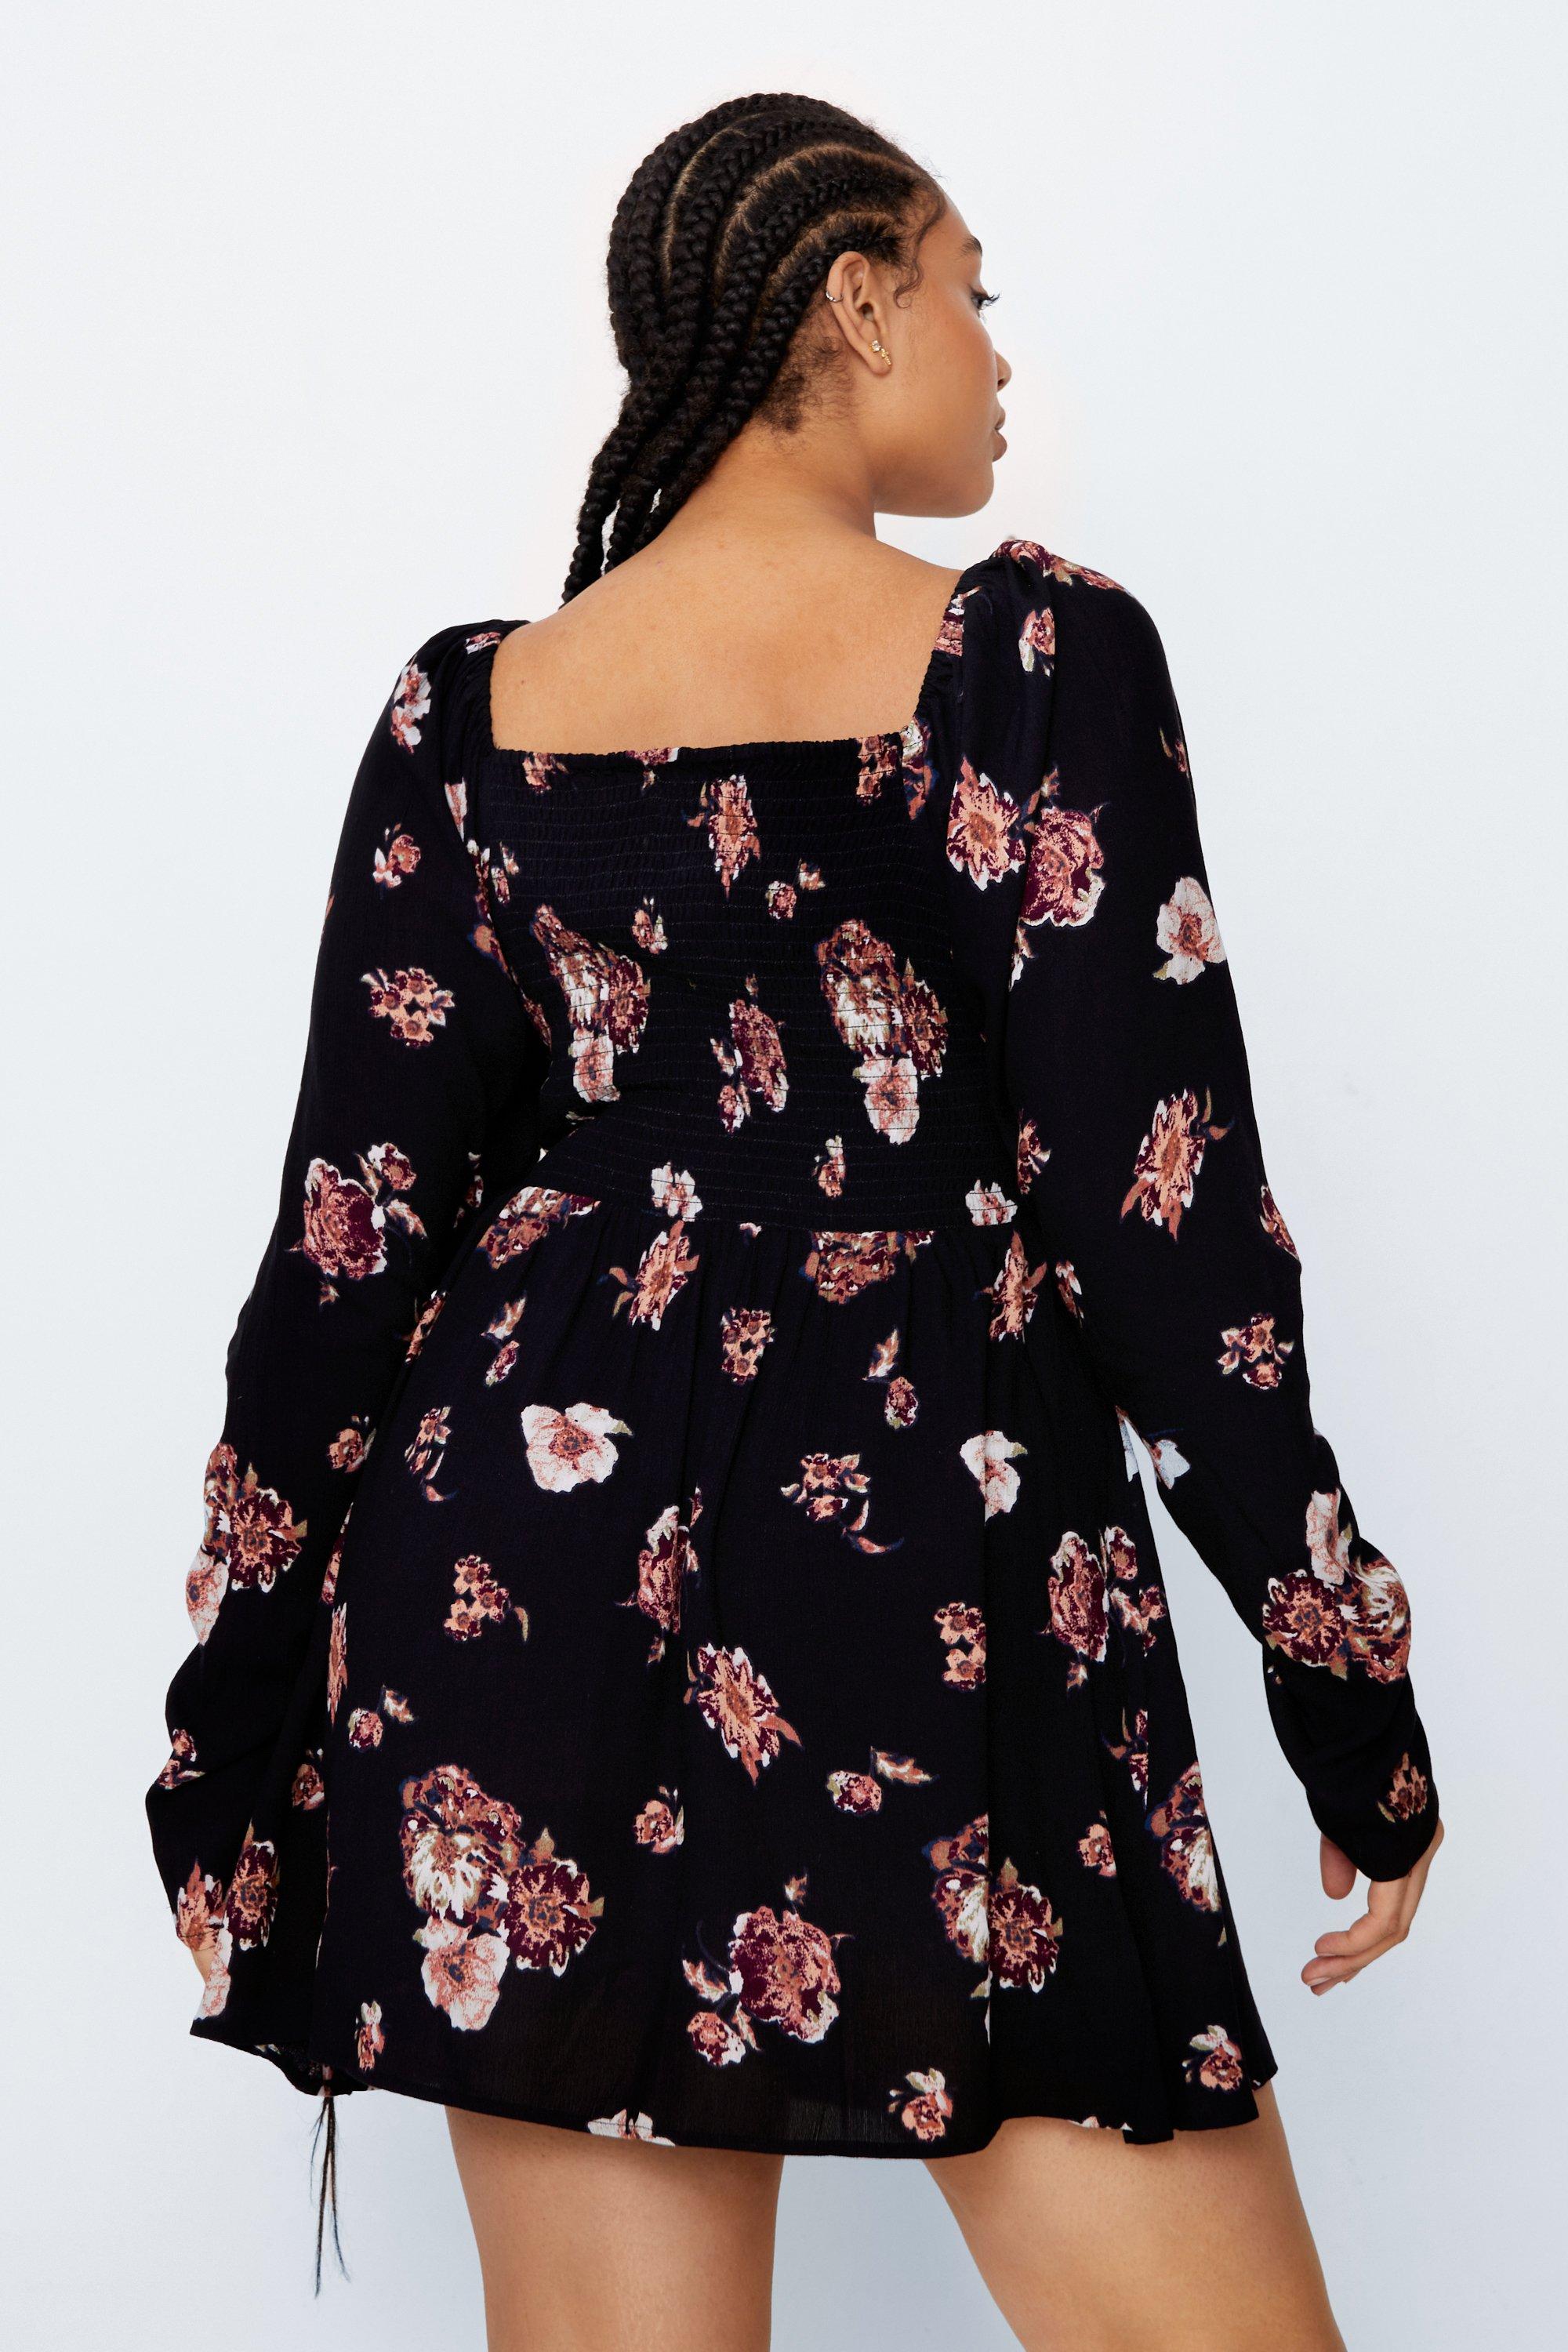 girlcrush: Floral & Fringe  Black floral dress outfit, Tight